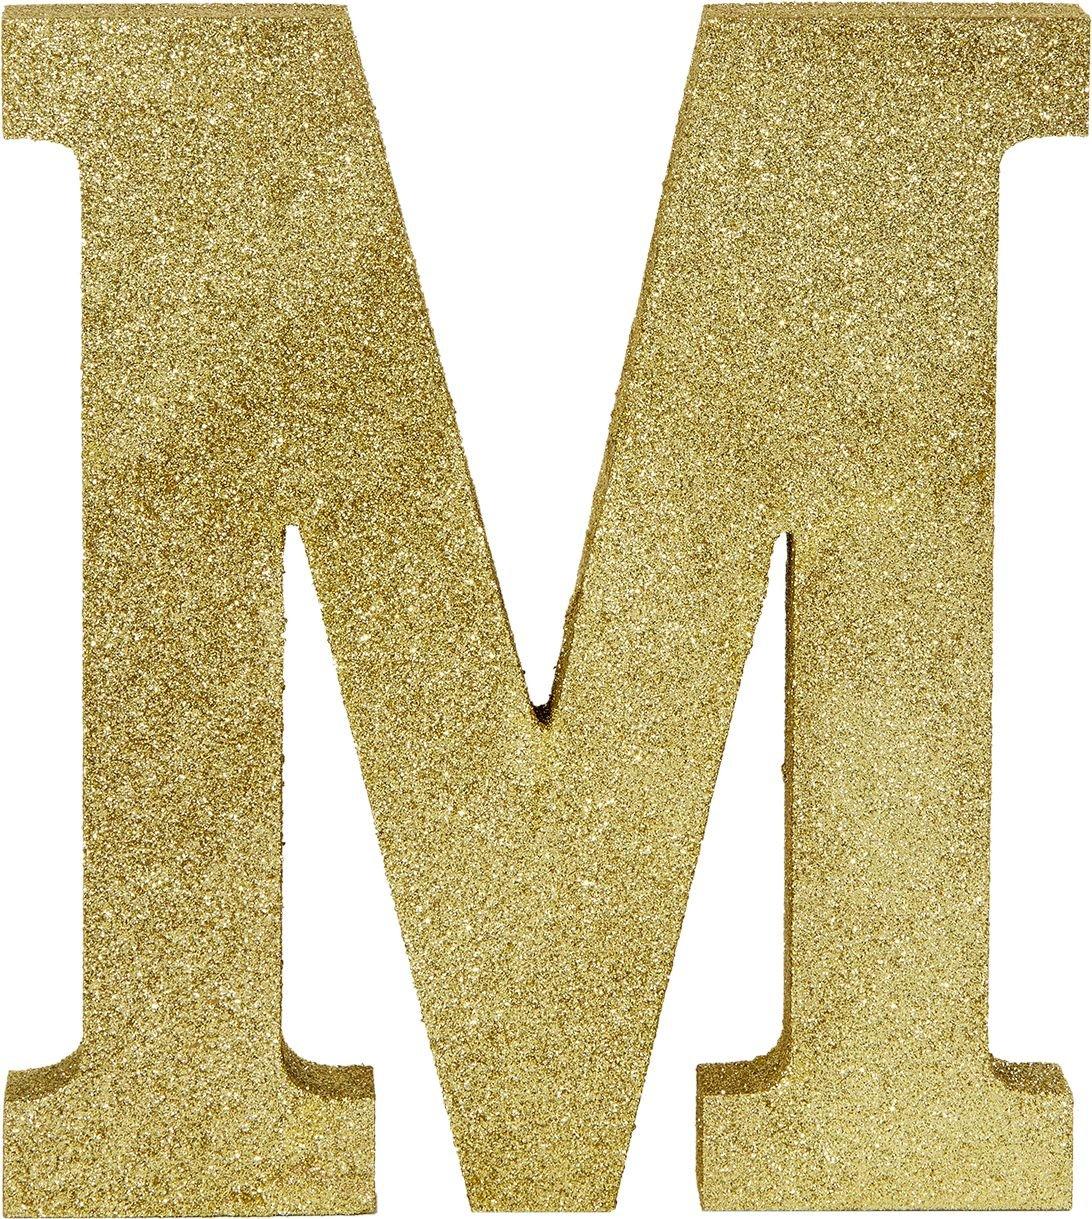 the letter m in glitter